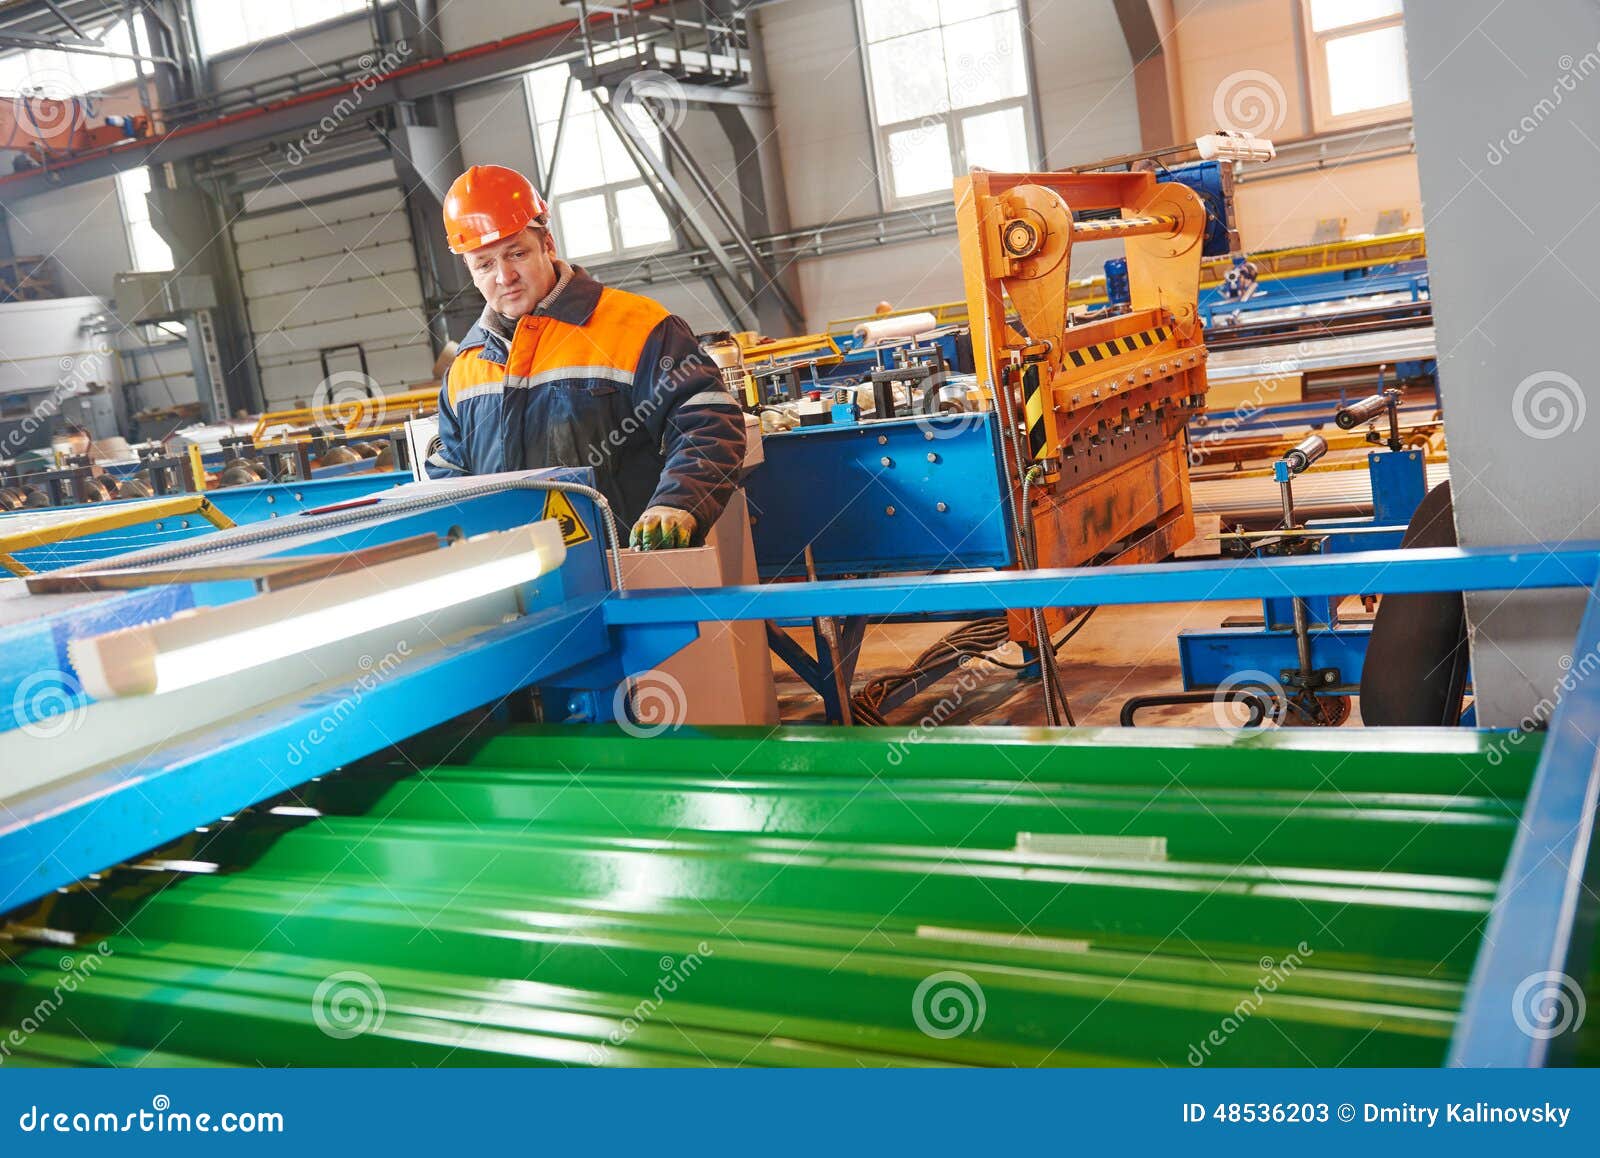 worker at metal sheet profiling factory